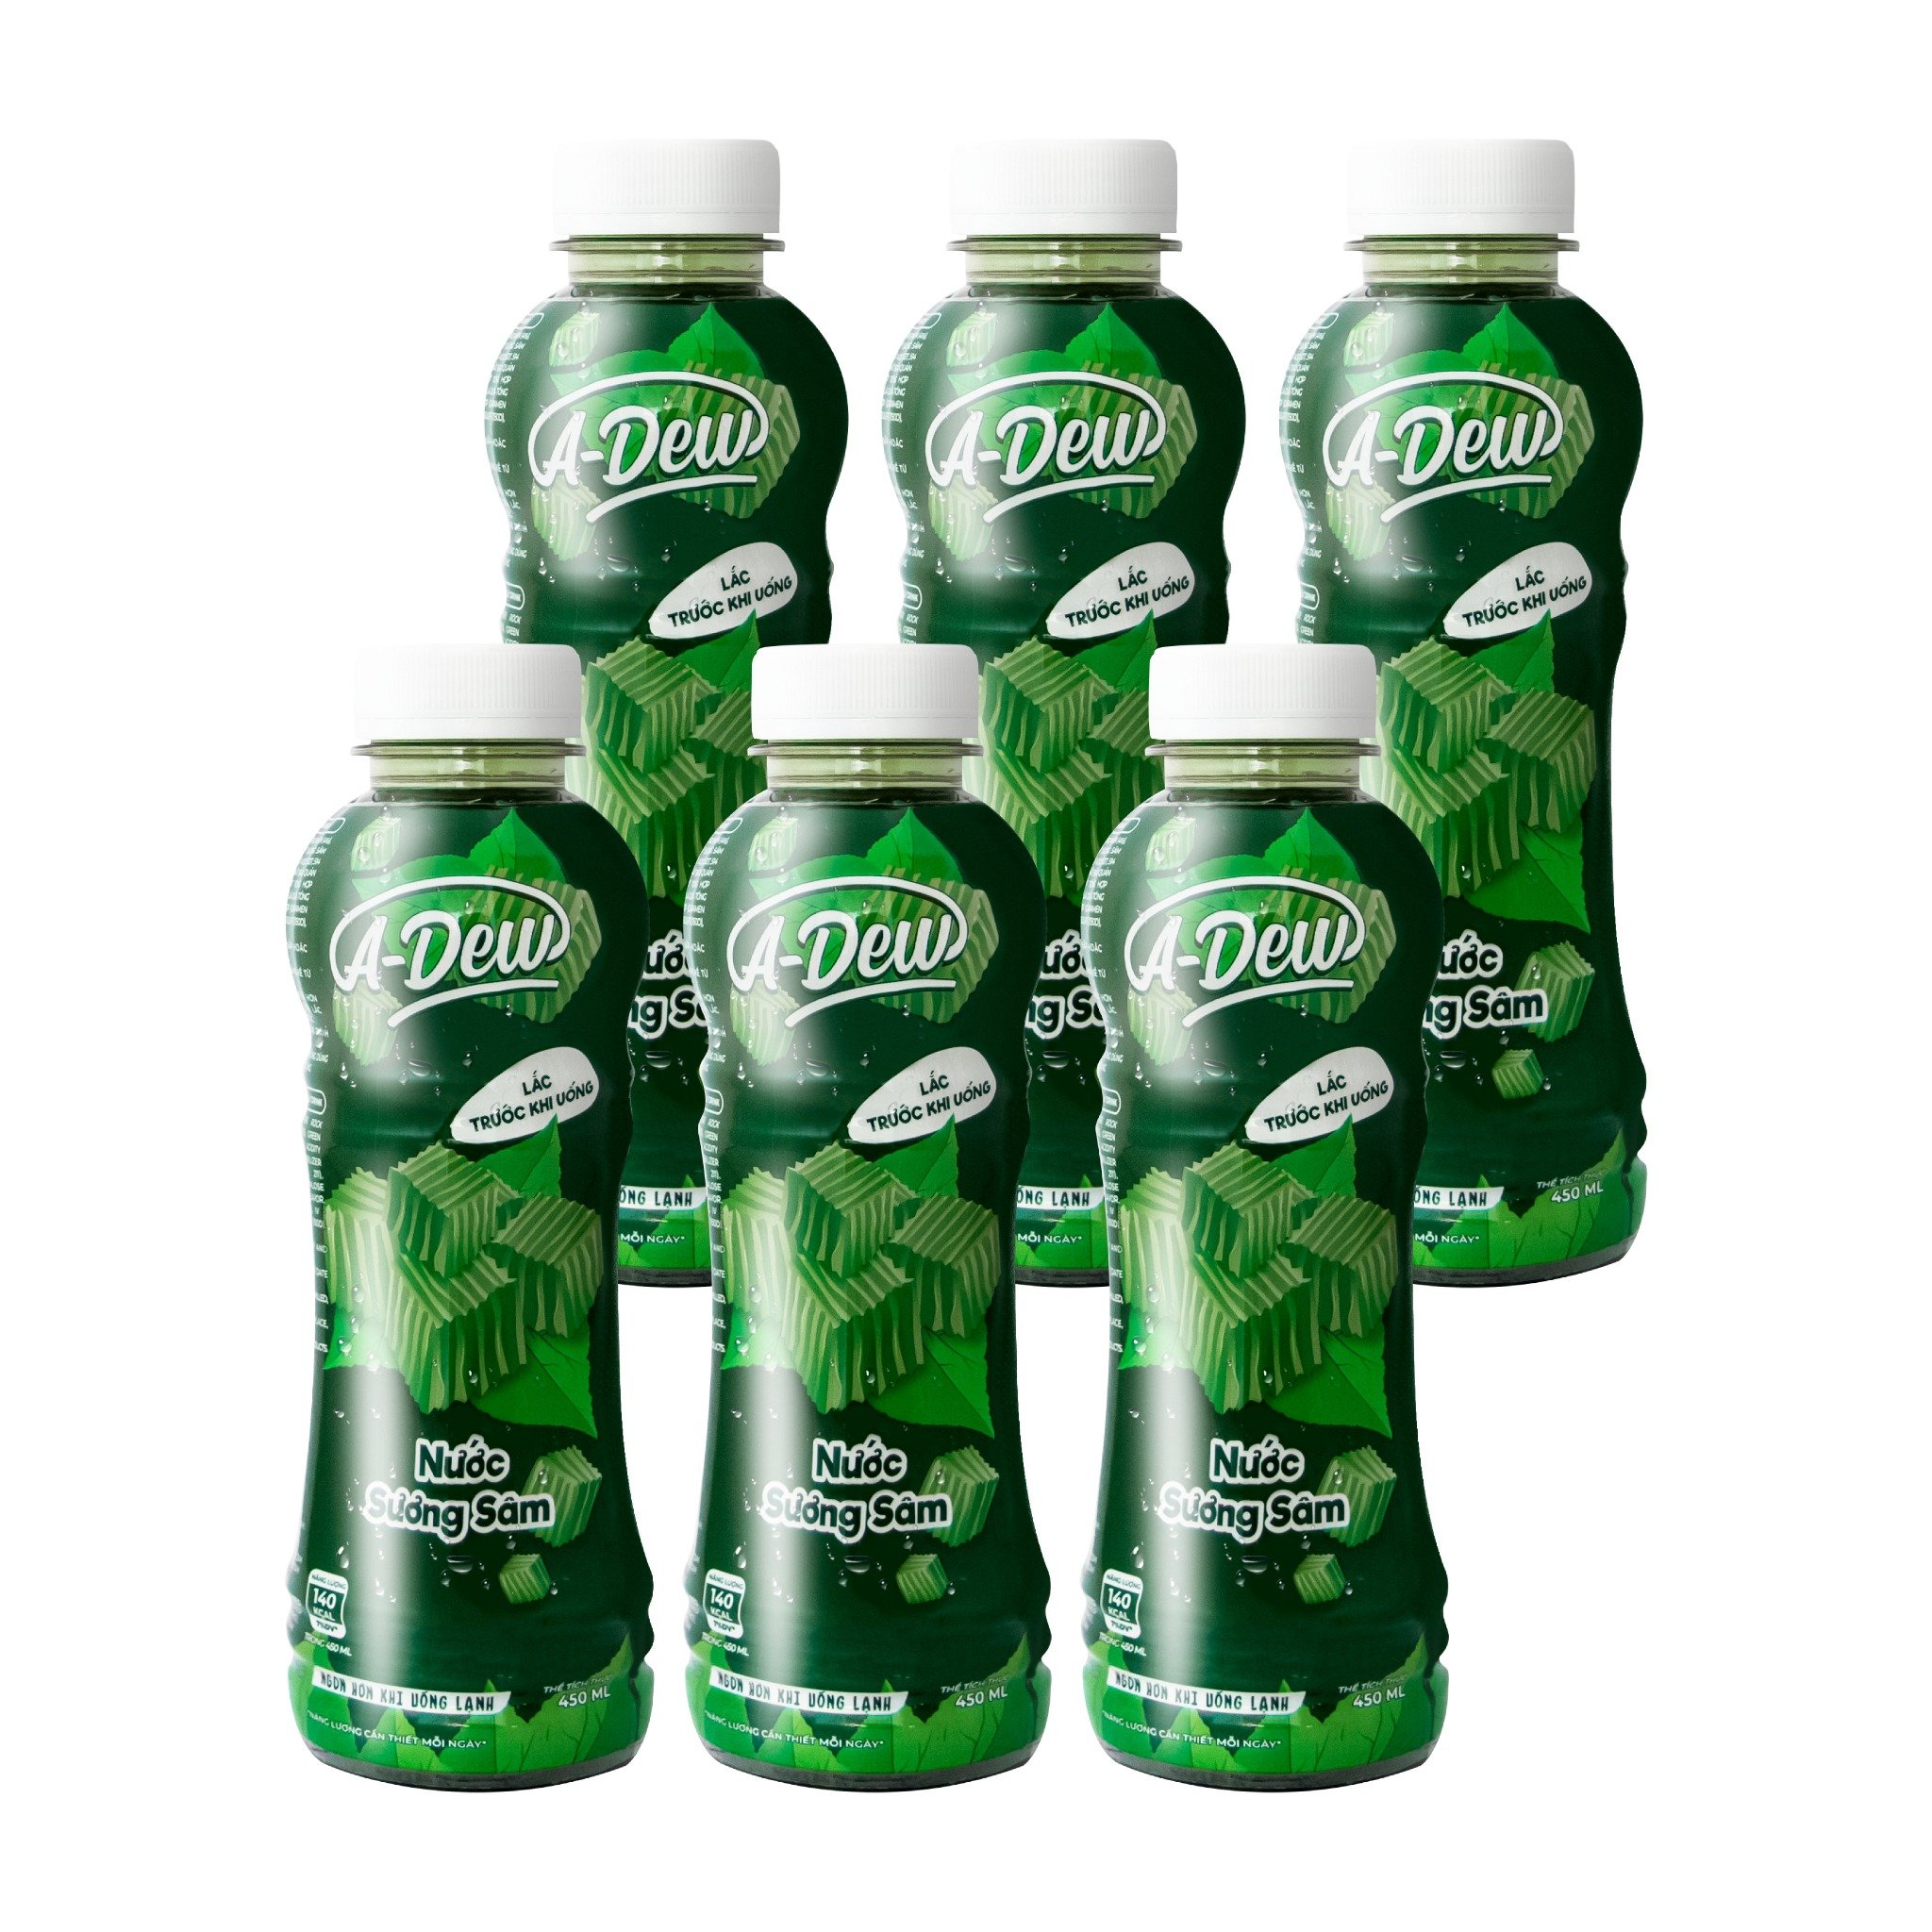 450ml A-Dew Green Grass Jelly Drink